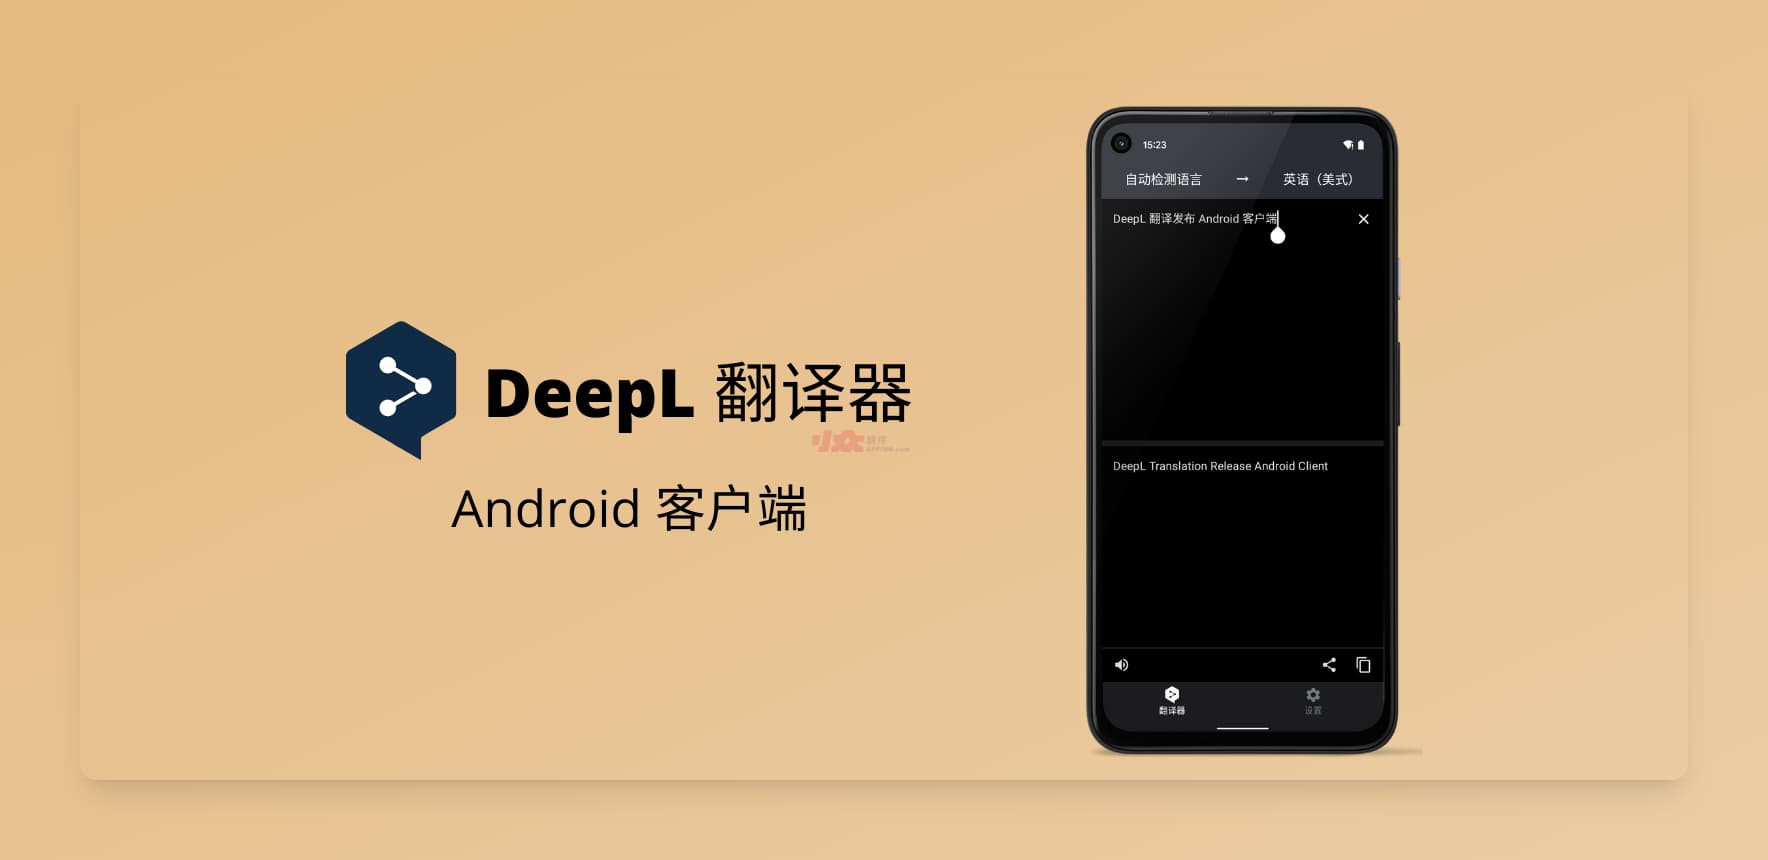 DeepL 翻译 Android 版本发布